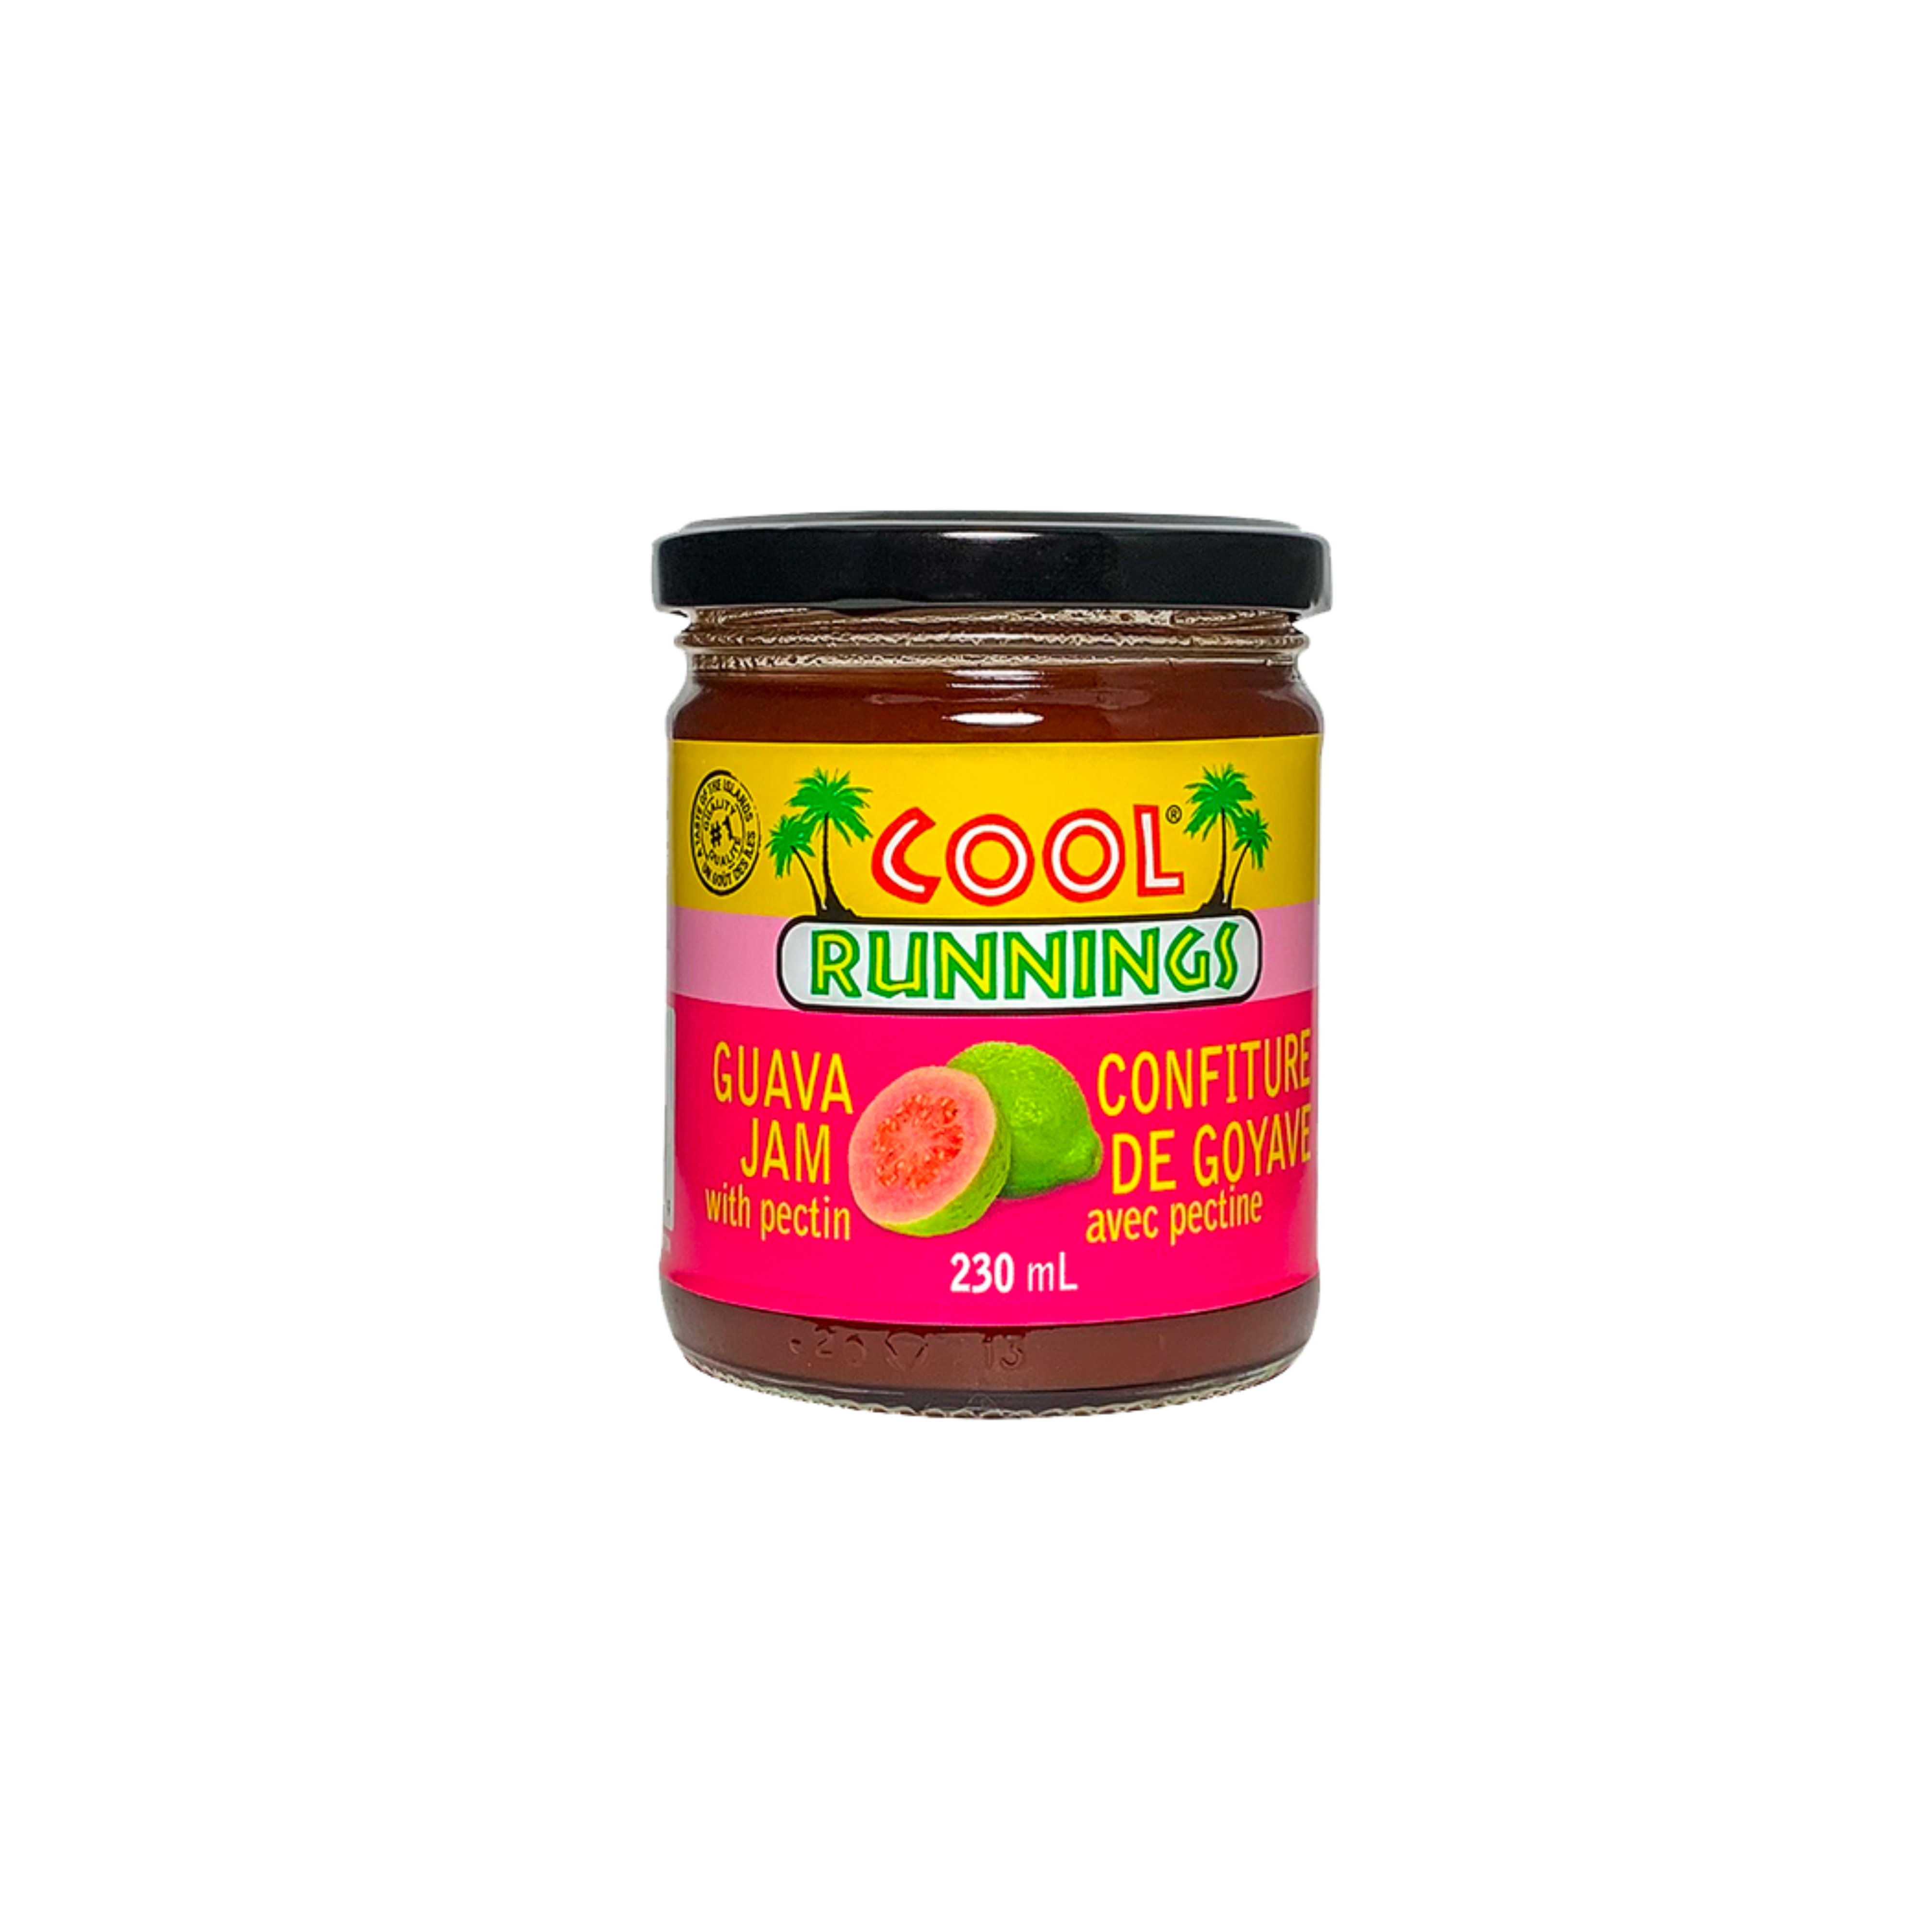 Cool Running Guava jam 230ml